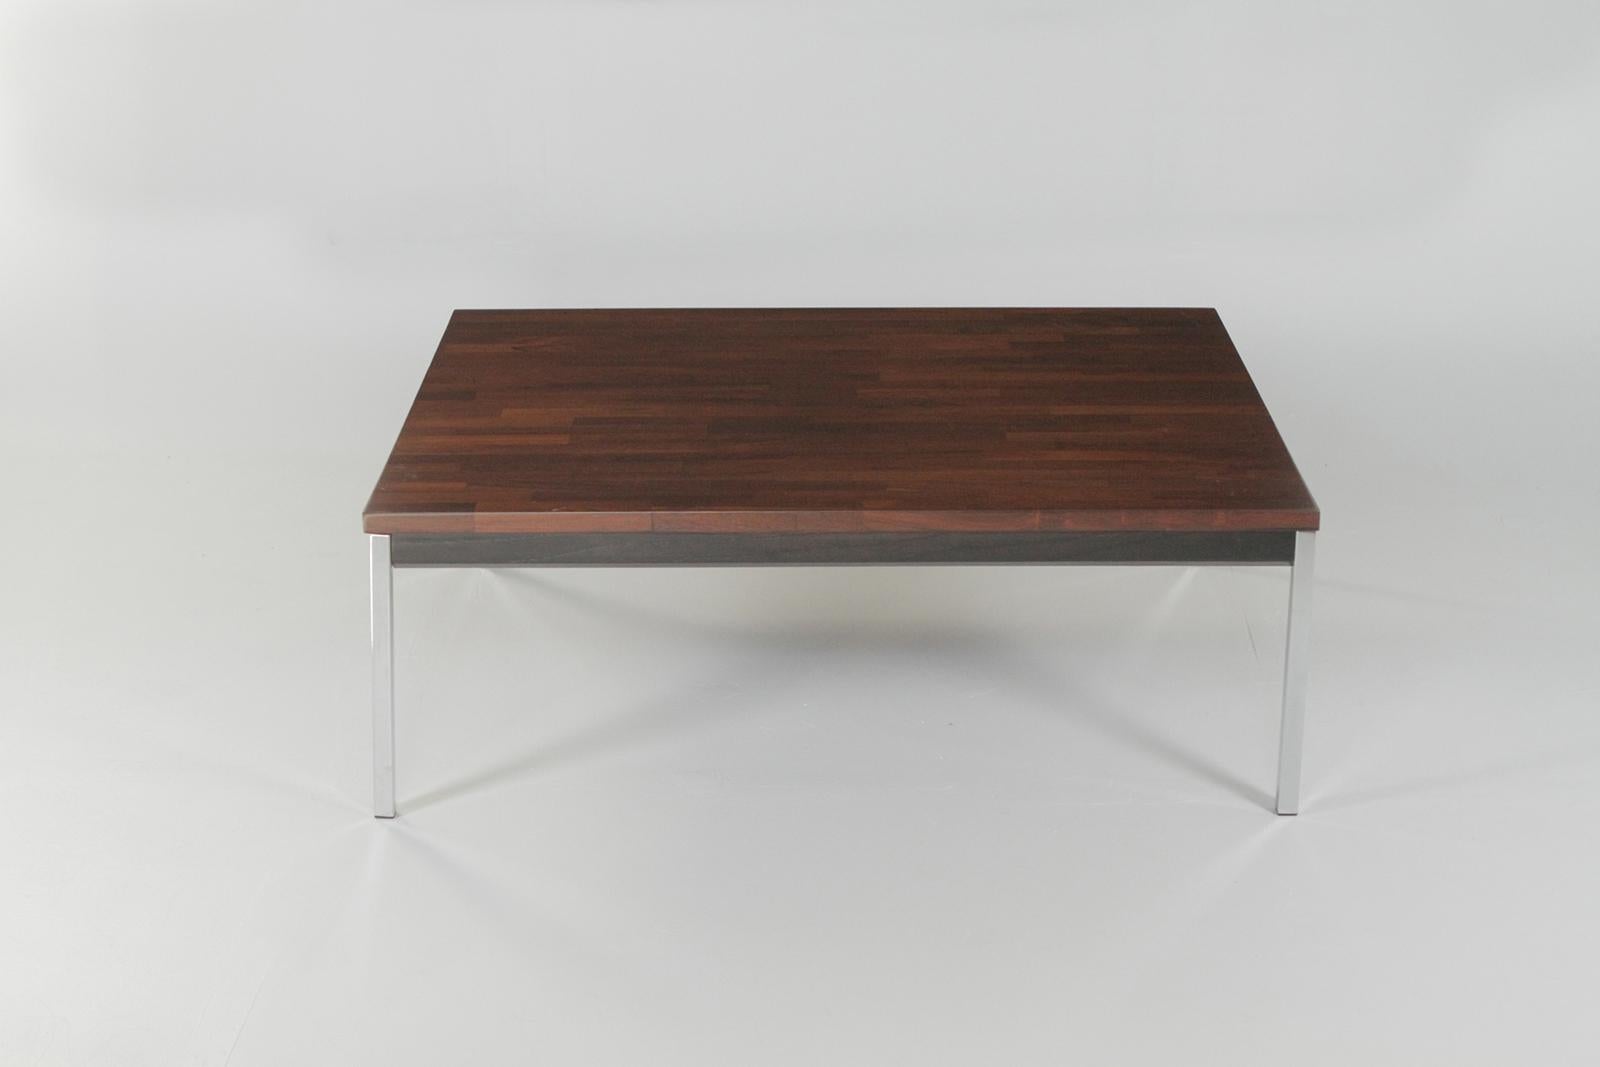 A sleek Mid-Century Modern coffee table having a beautiful rosewood veneer top, ebonized wood apron, and simple straight chrome legs.

Not marked but looks like Knoll.